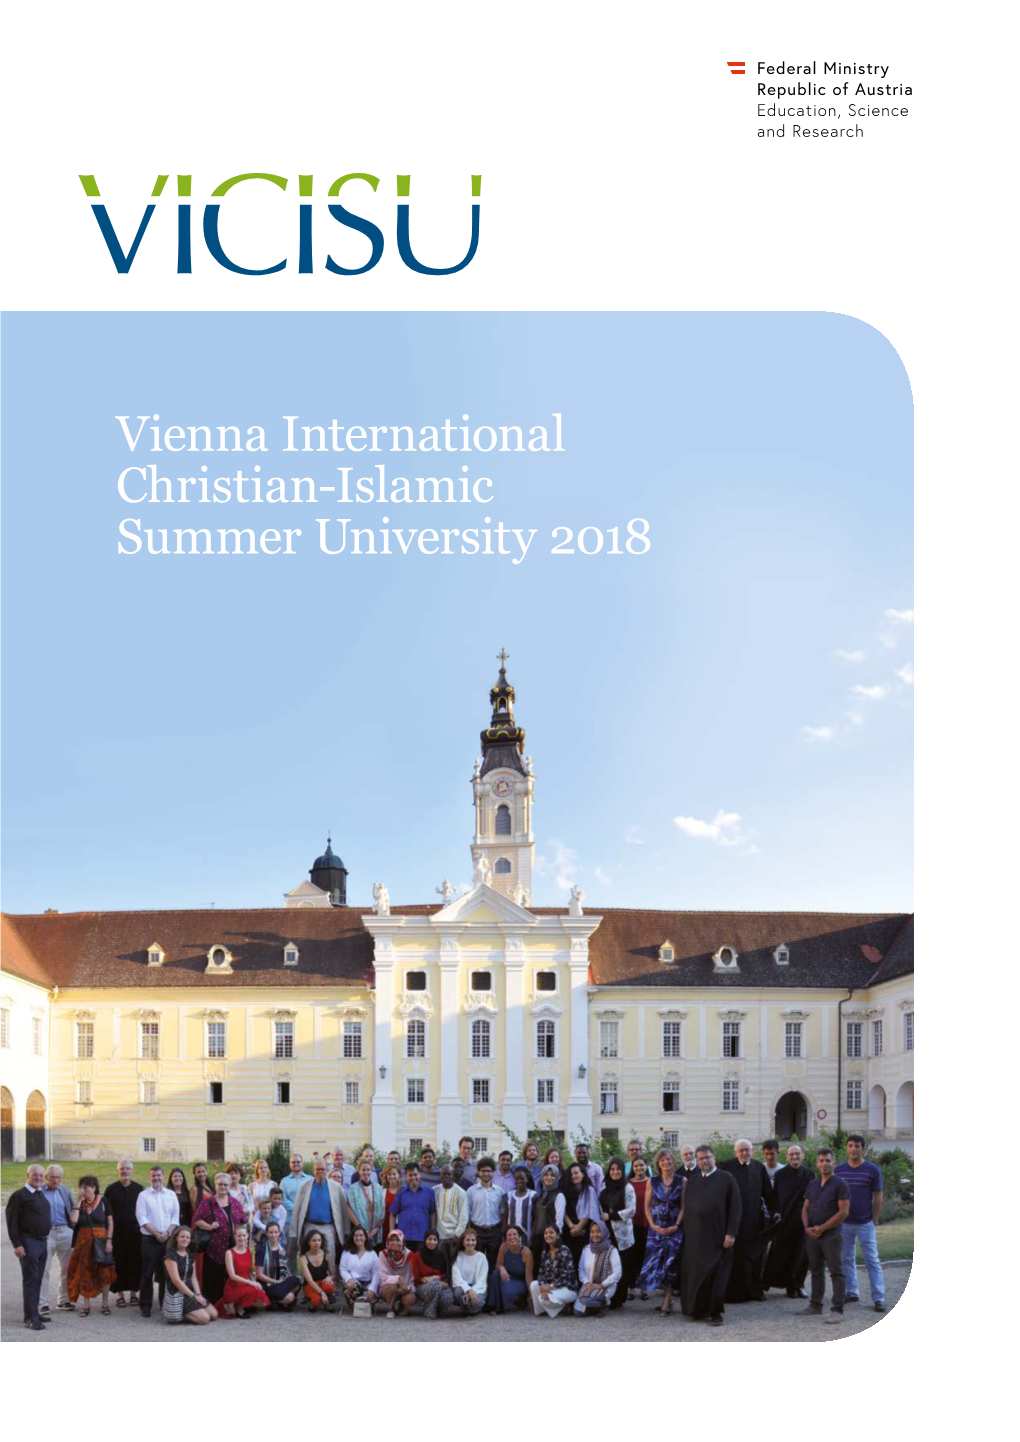 Vienna International Christian-Islamic Summer University 2018 Programme